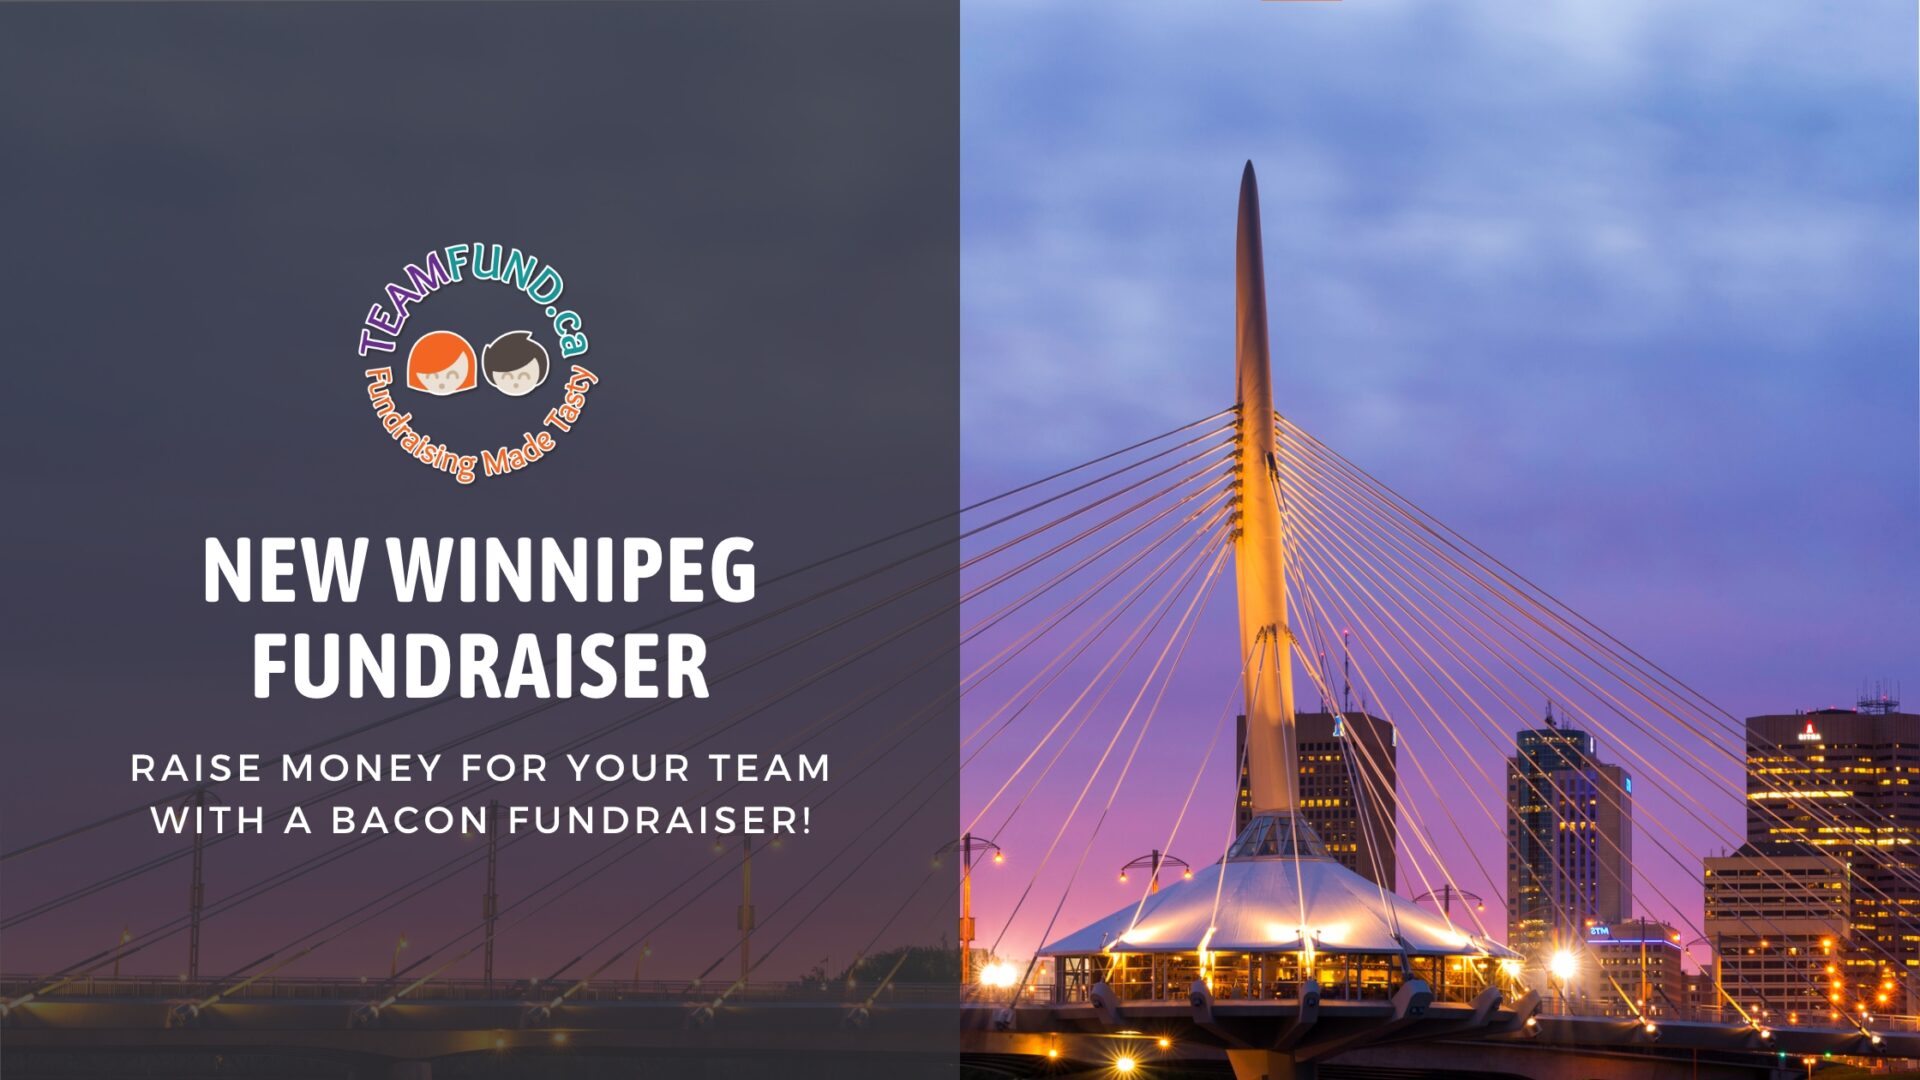 New Winnipeg Fundraiser: Raise Money for Your Team with Fresh Bacon!